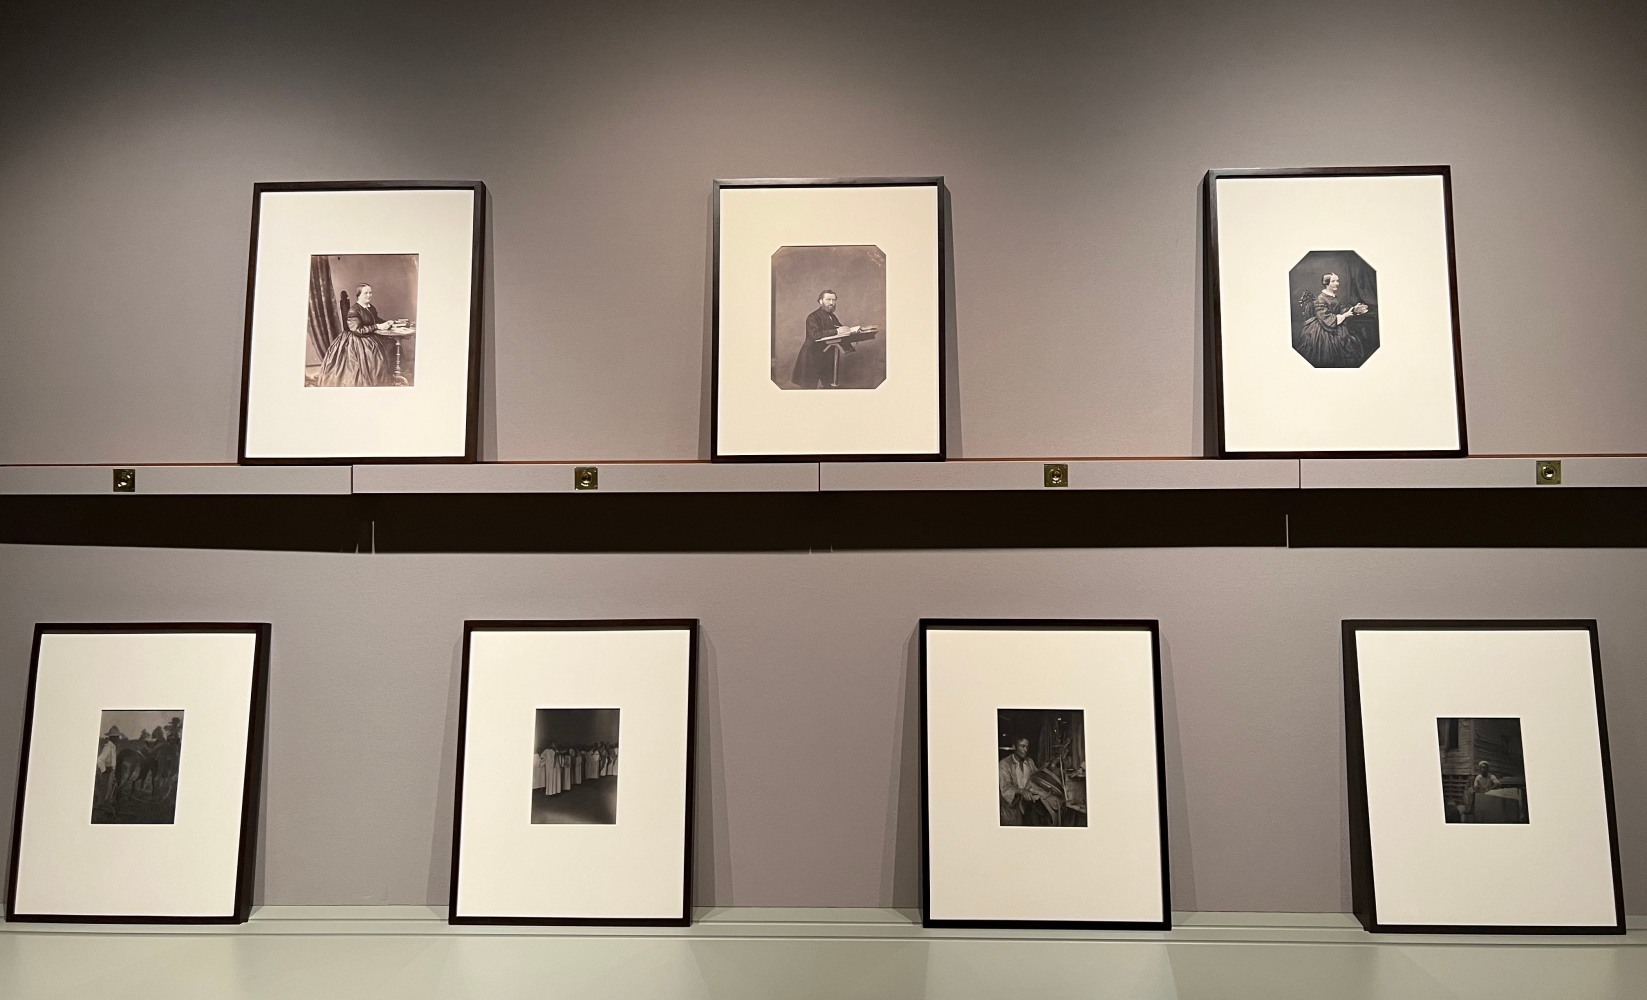 Installation view of exhibition, 3 albumen prints of portraits by Bertha Wehnert Beckman and 4 platinum prints by Doris Ulmann